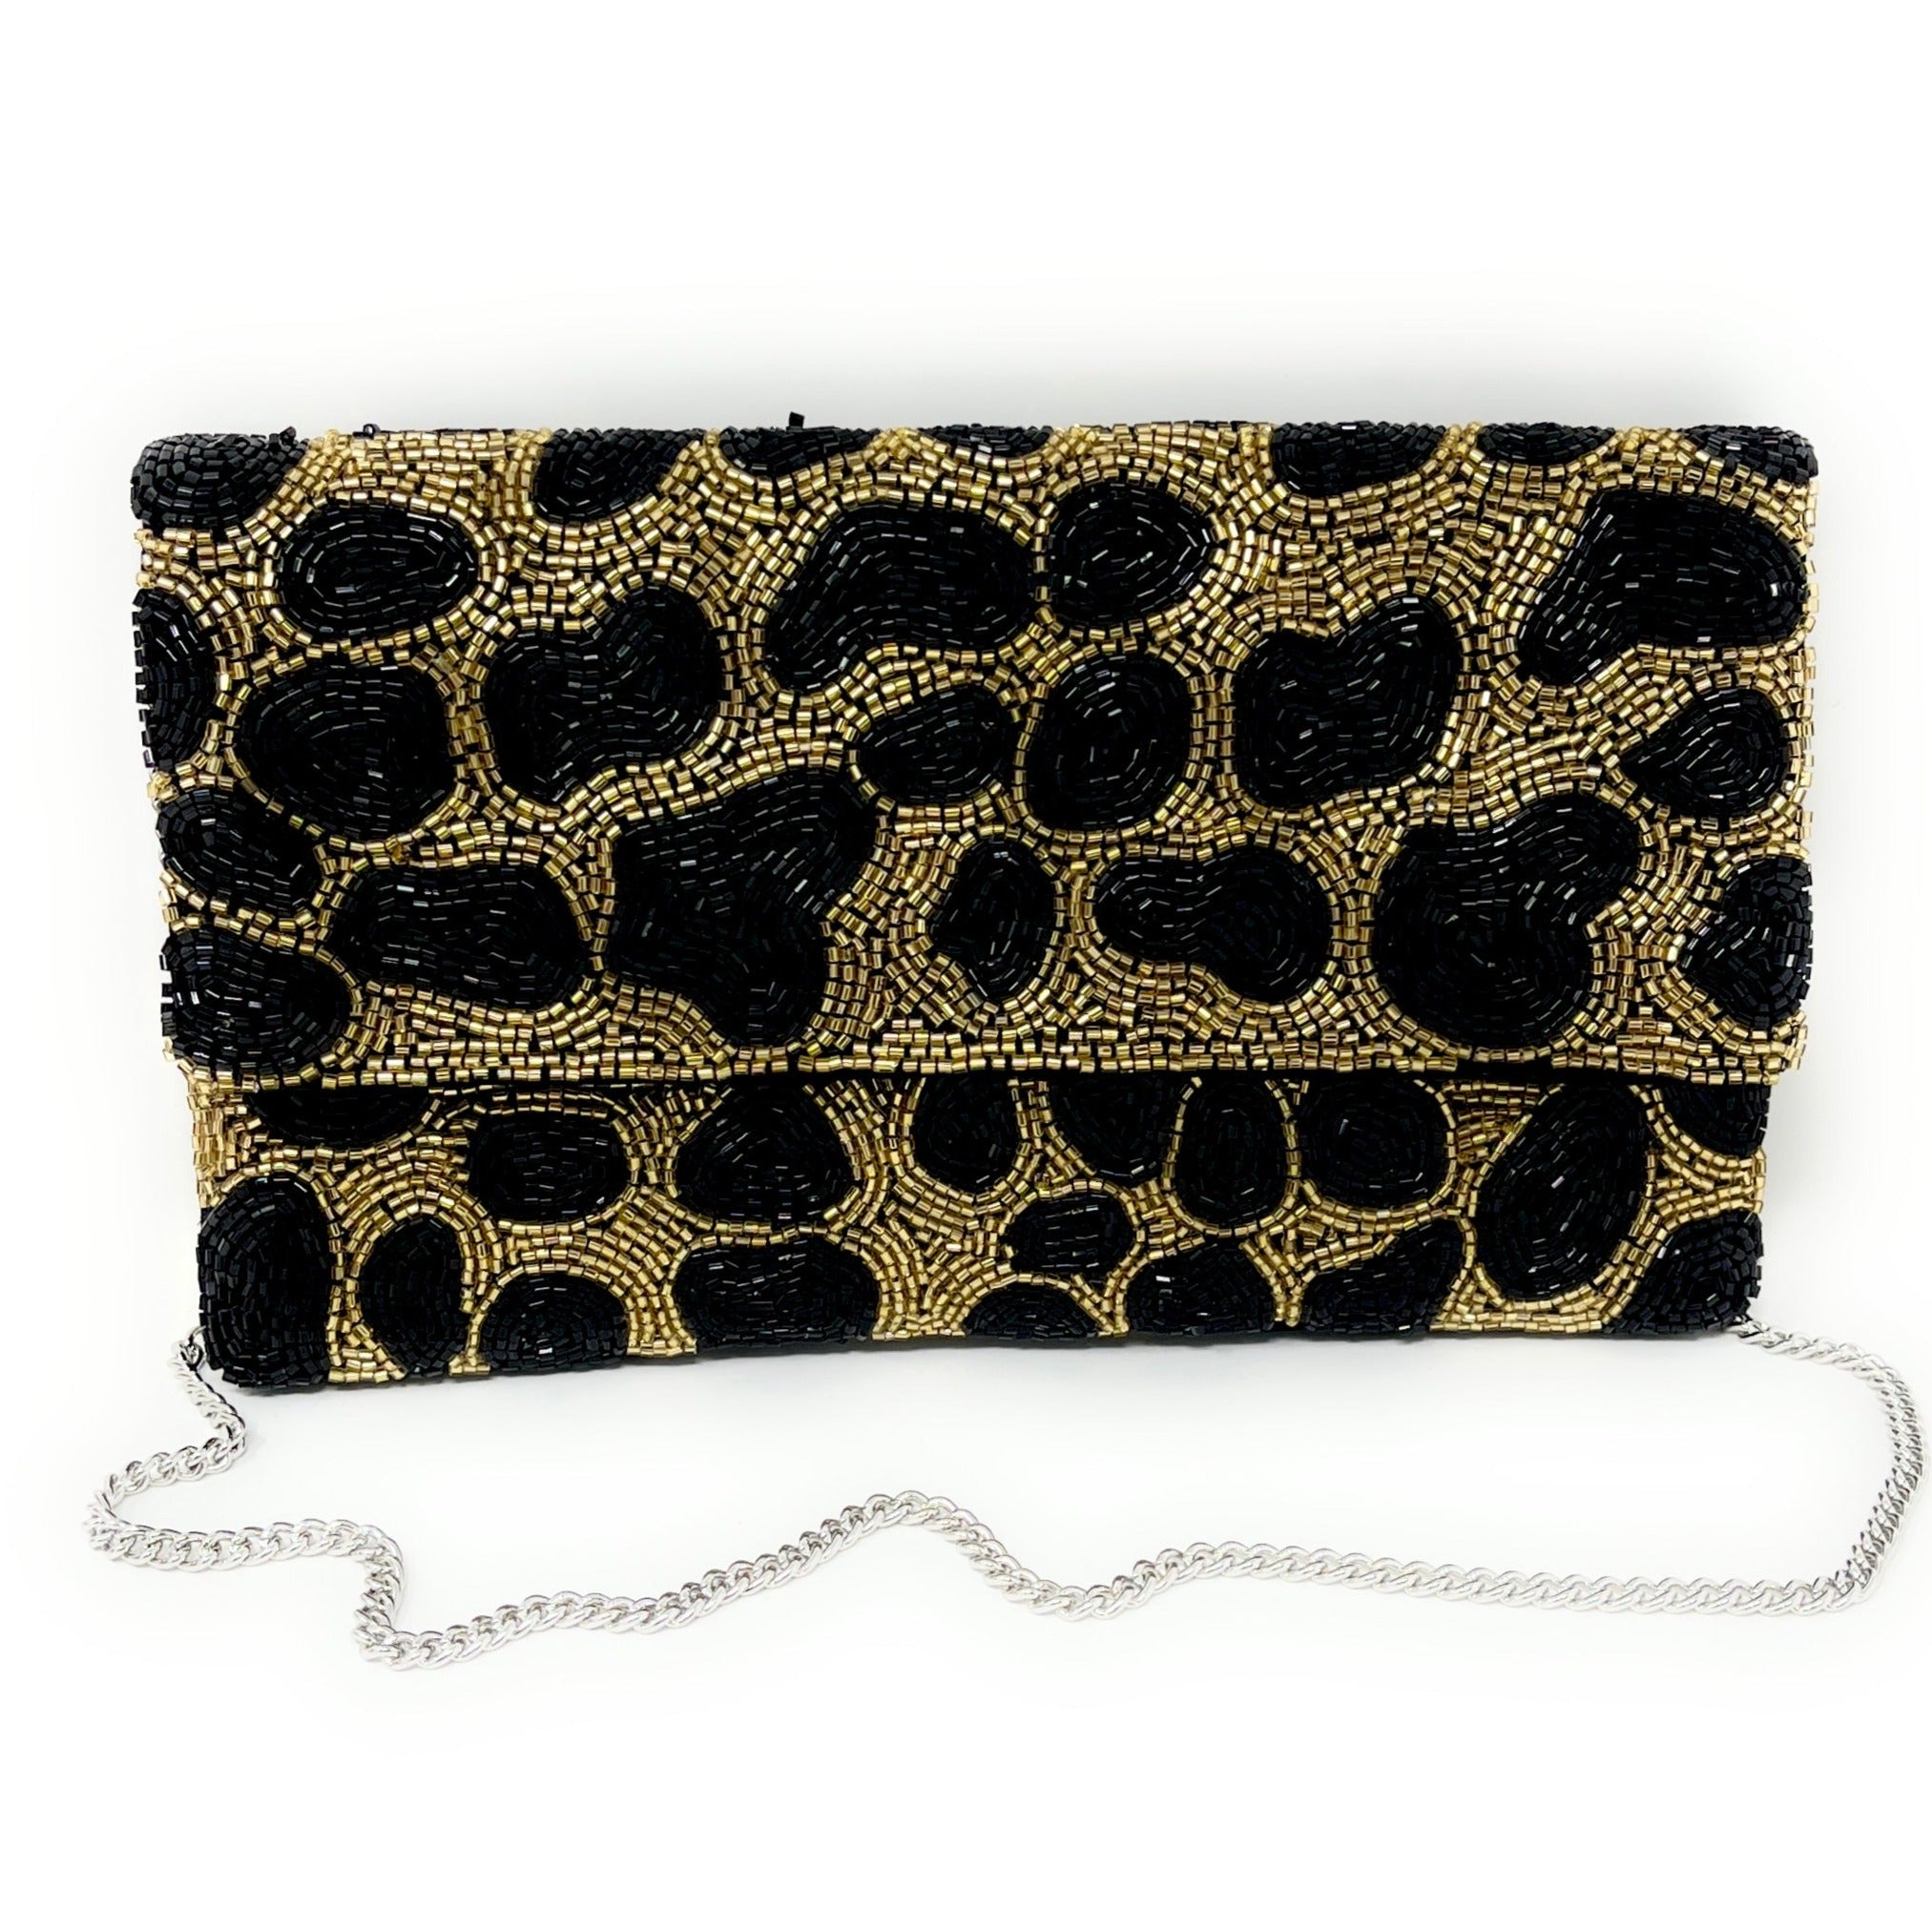 Leopard Beaded Clutch, Leopard Crossbody Bag, Evening Party Bag